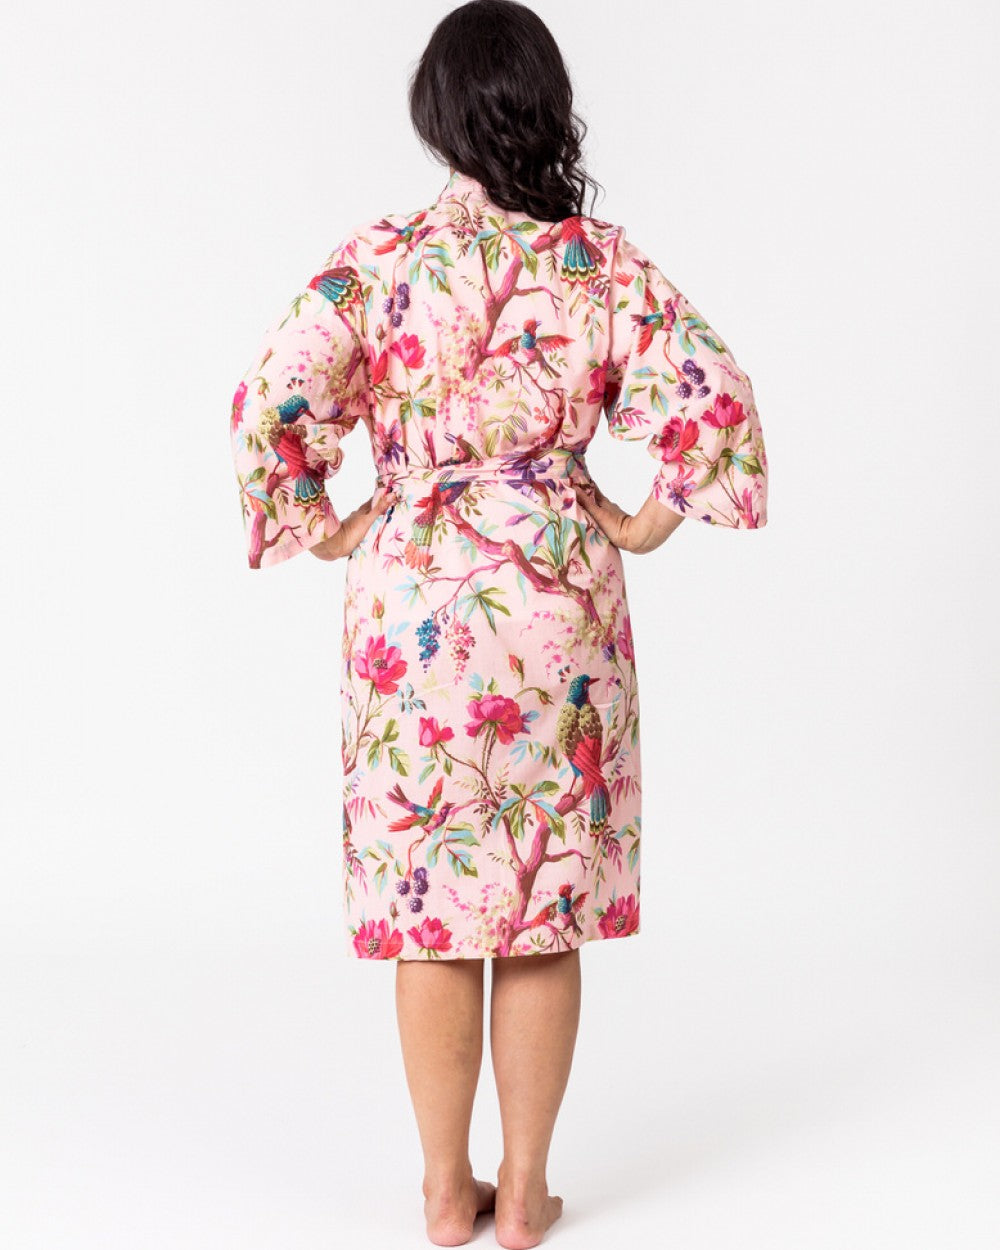 Paradise rose kimono robe with bird of paradise pattern - Floressents